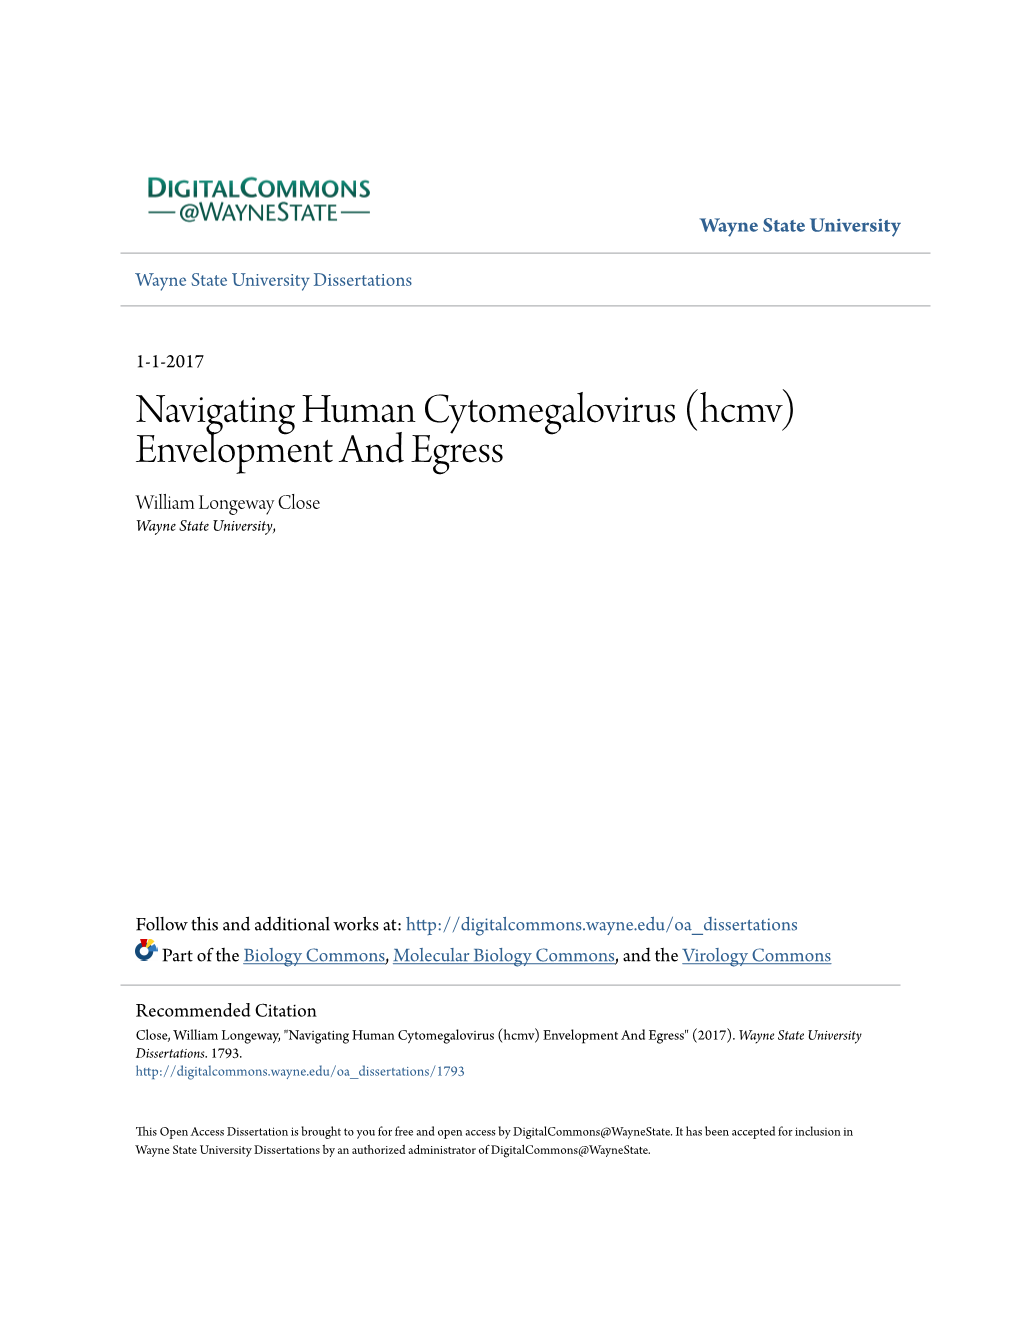 Navigating Human Cytomegalovirus (Hcmv) Envelopment and Egress William Longeway Close Wayne State University